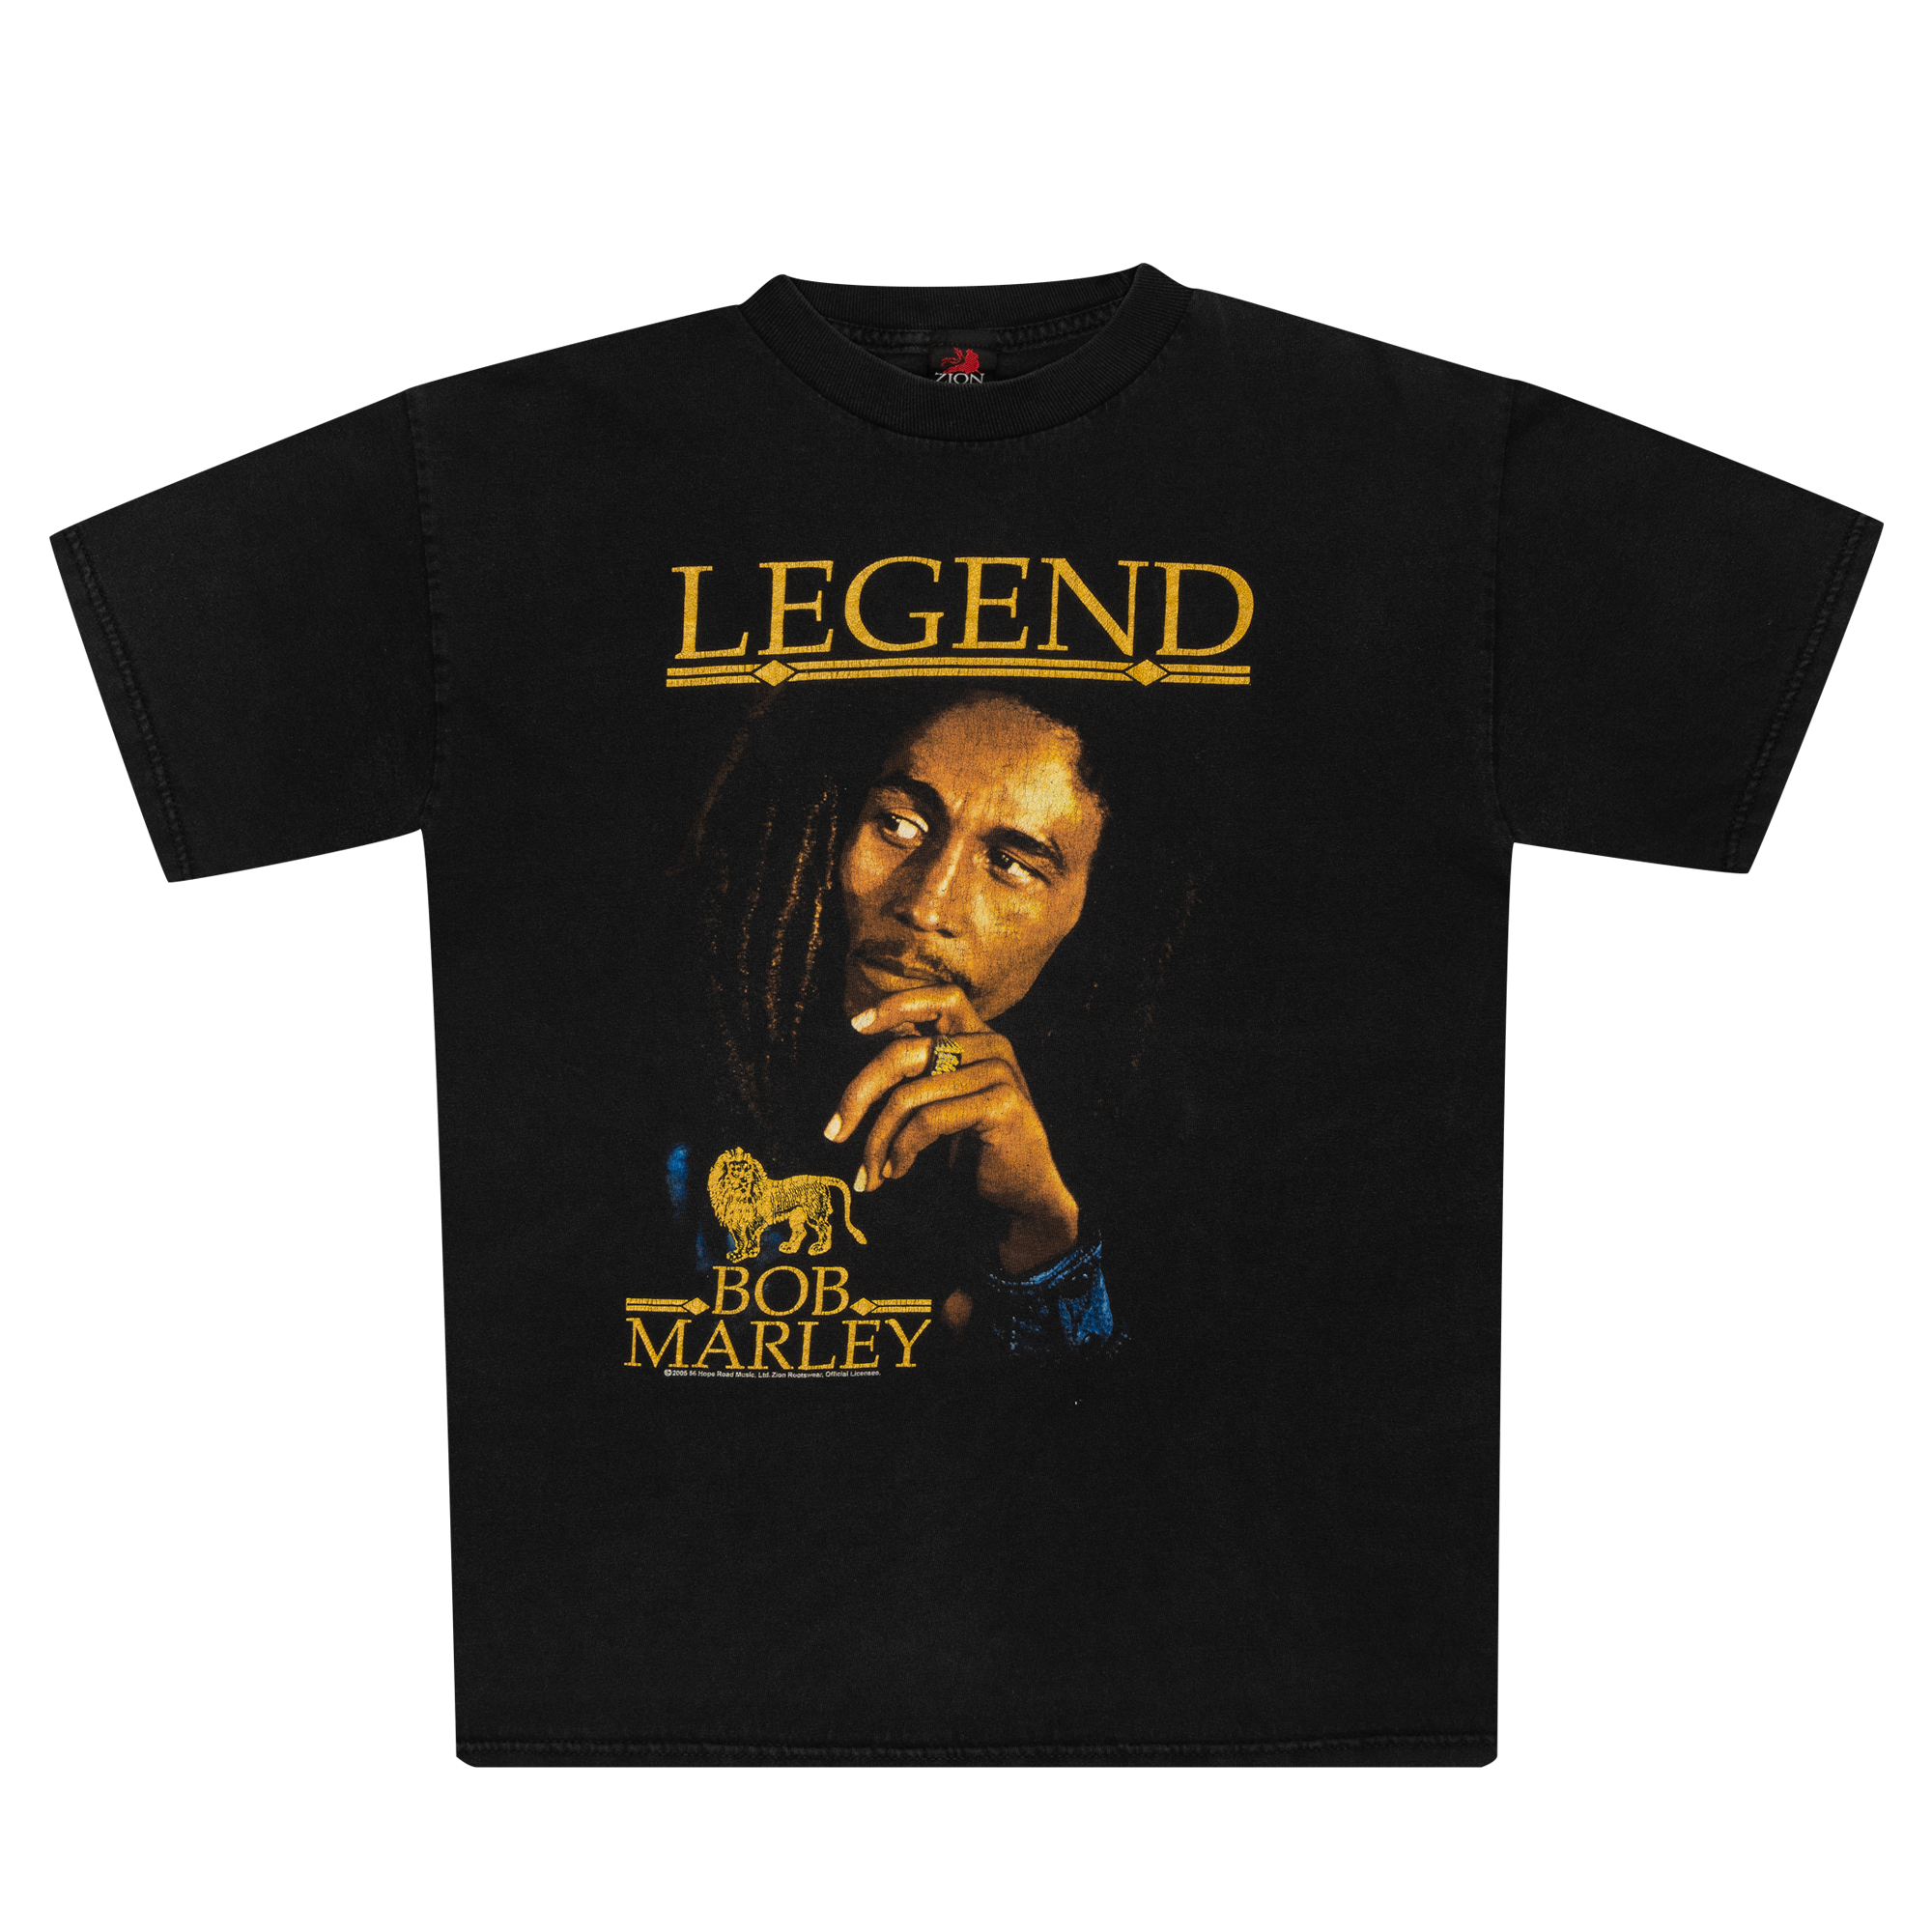 Legend Bob Marley Zion Rootswear 2005 Music Tee Black-PLUS